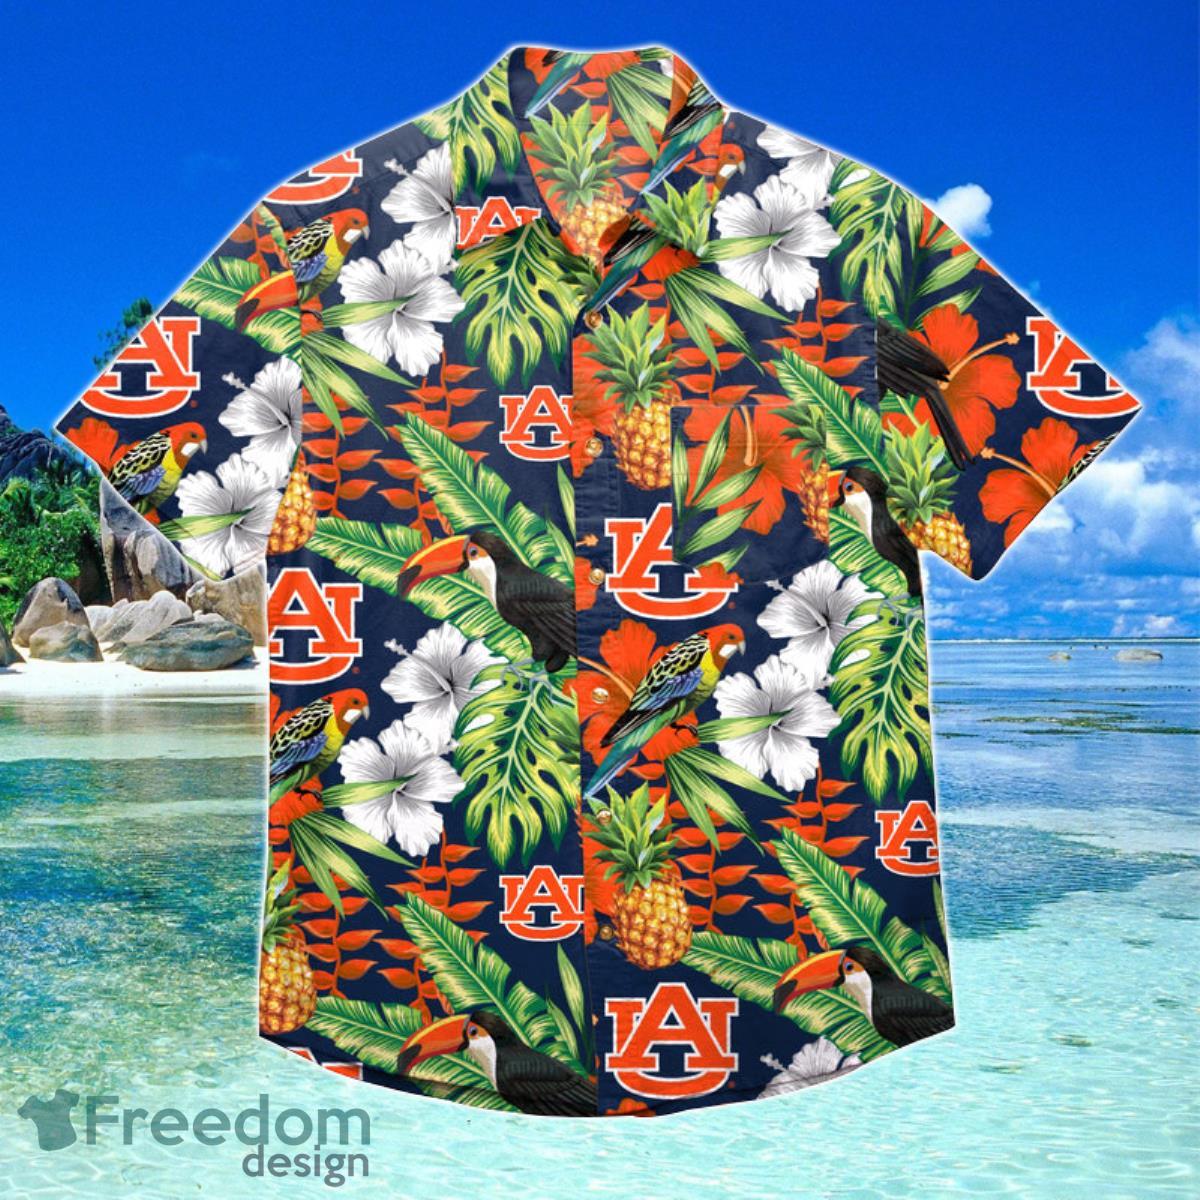 Boston bruins hawaiian shirt - Ingenious Gifts Your Whole Family